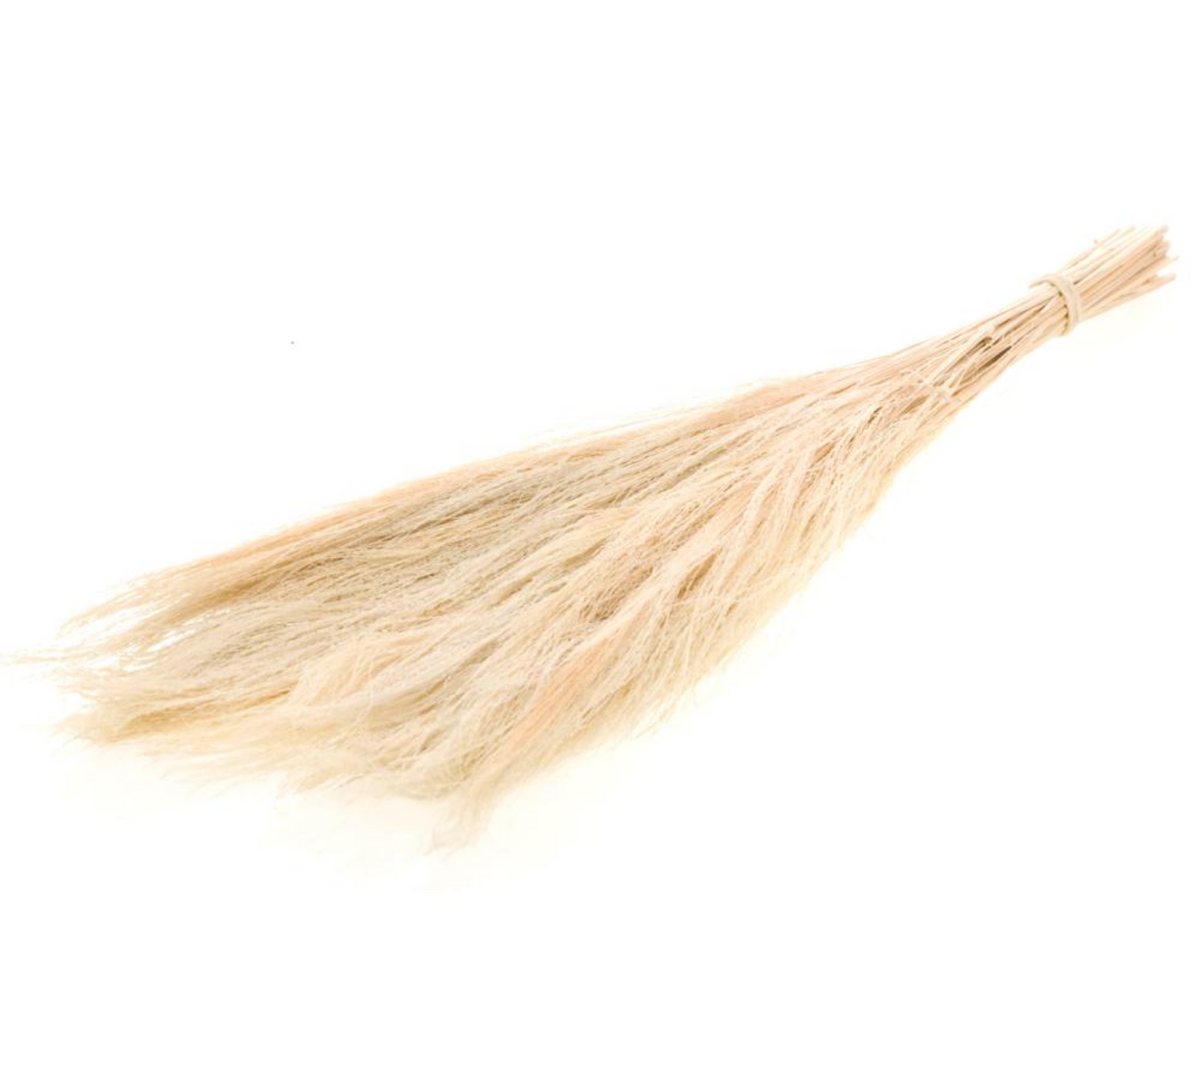 Broom grass 65cm - Natural